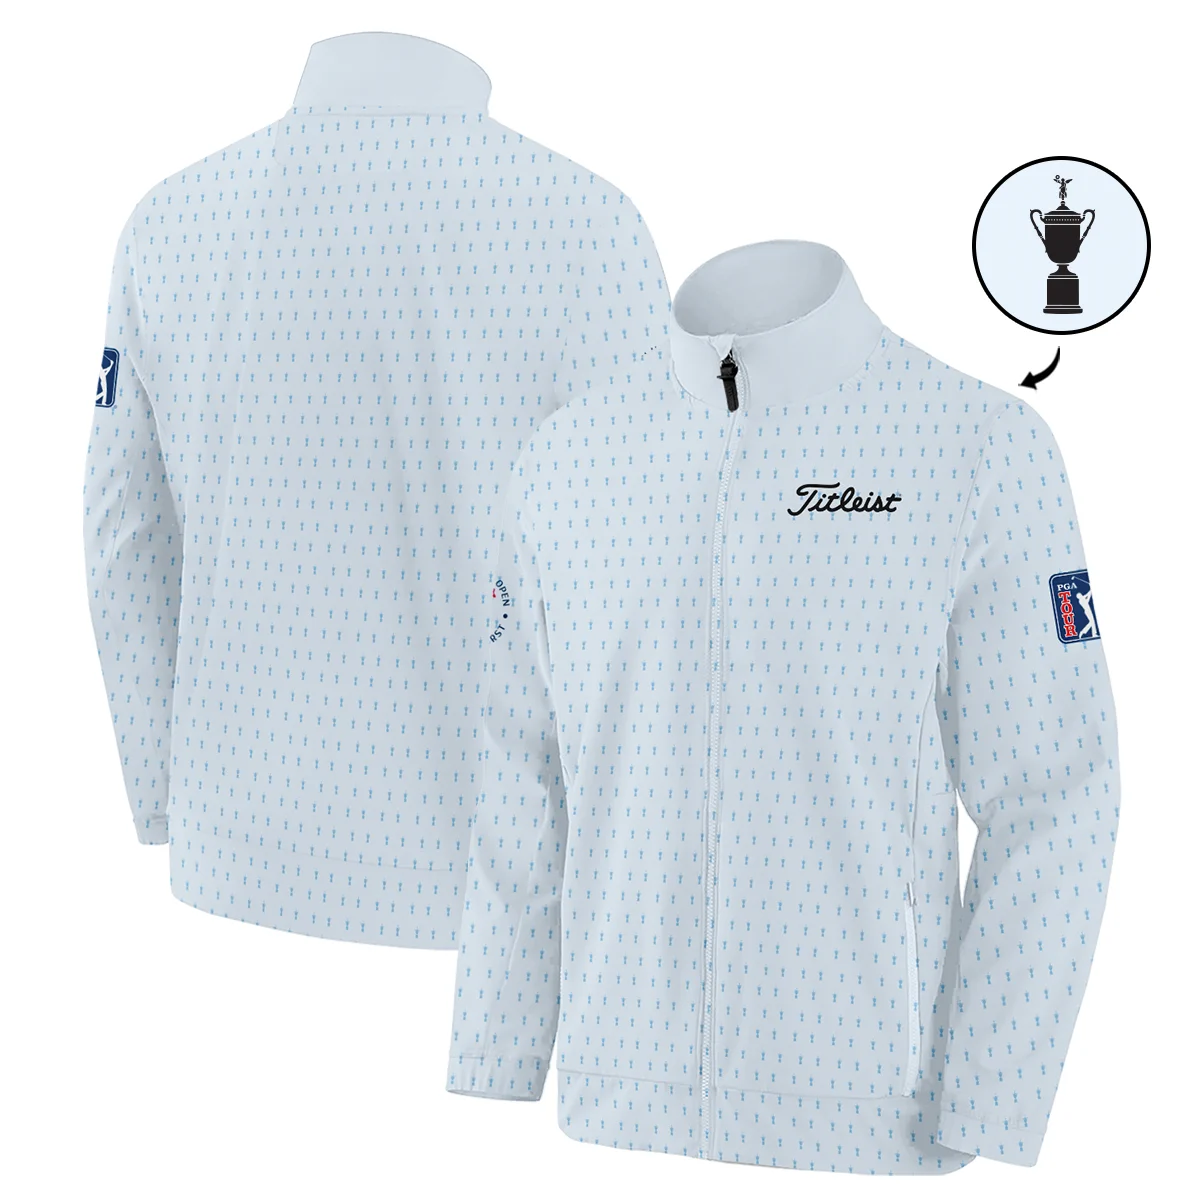 124th U.S. Open Pinehurst Titleist Sleeveless Jacket Sports Pattern Cup Color Light Blue All Over Print Sleeveless Jacket